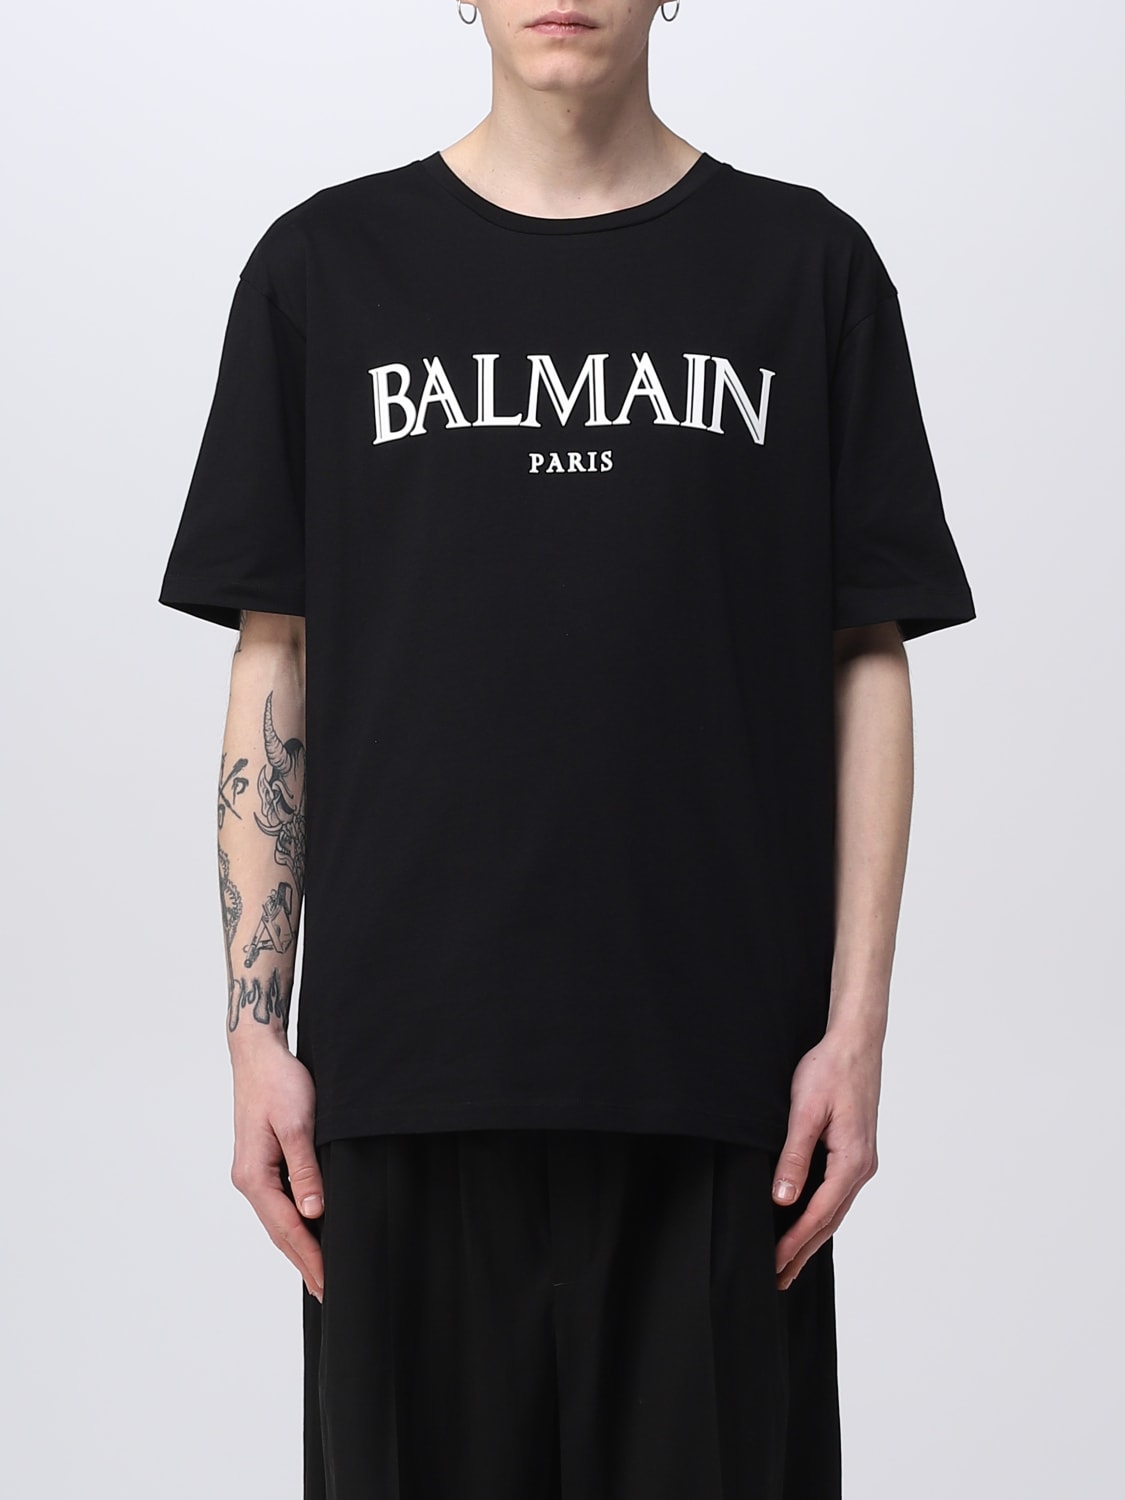 løber tør Beskæftiget Bedre BALMAIN: cotton t-shirt - Black | Balmain t-shirt AH0EG000BC27 online at  GIGLIO.COM